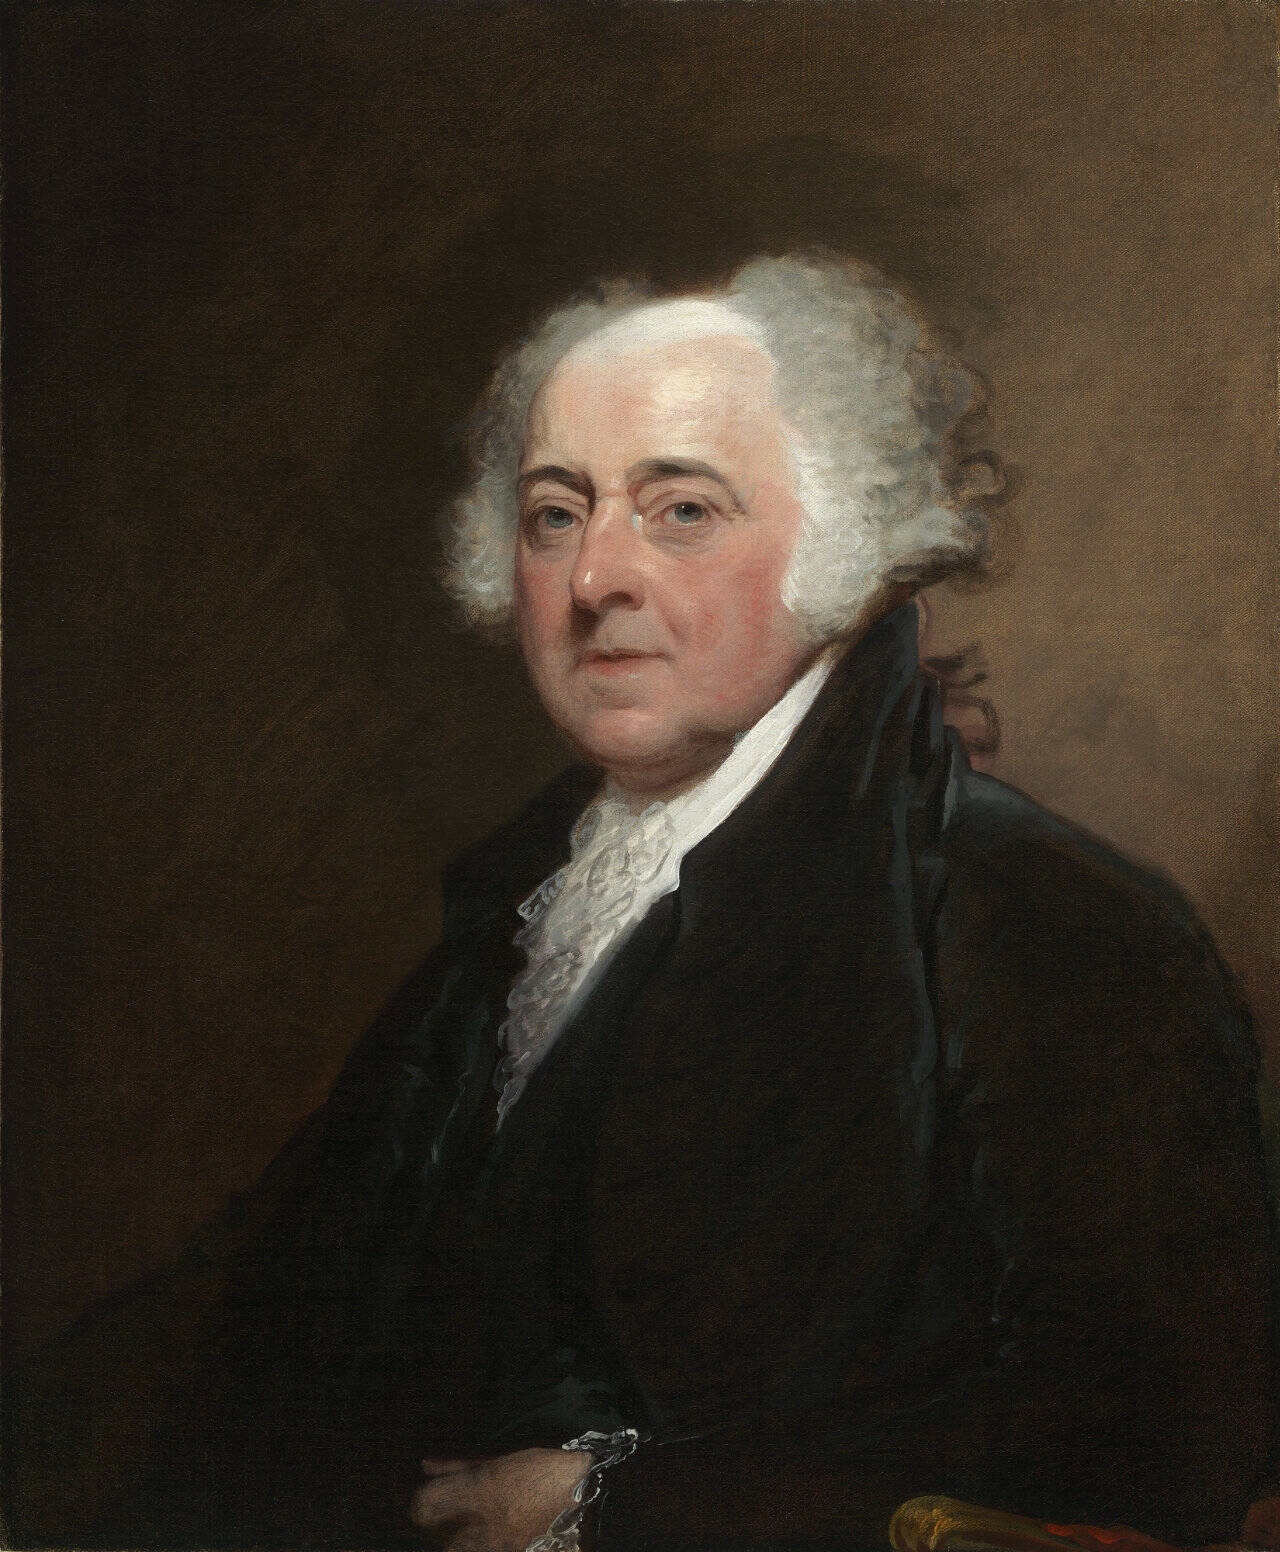 Gilbert Stuart’s portrait of John Adams. (Wikimedia Commons)